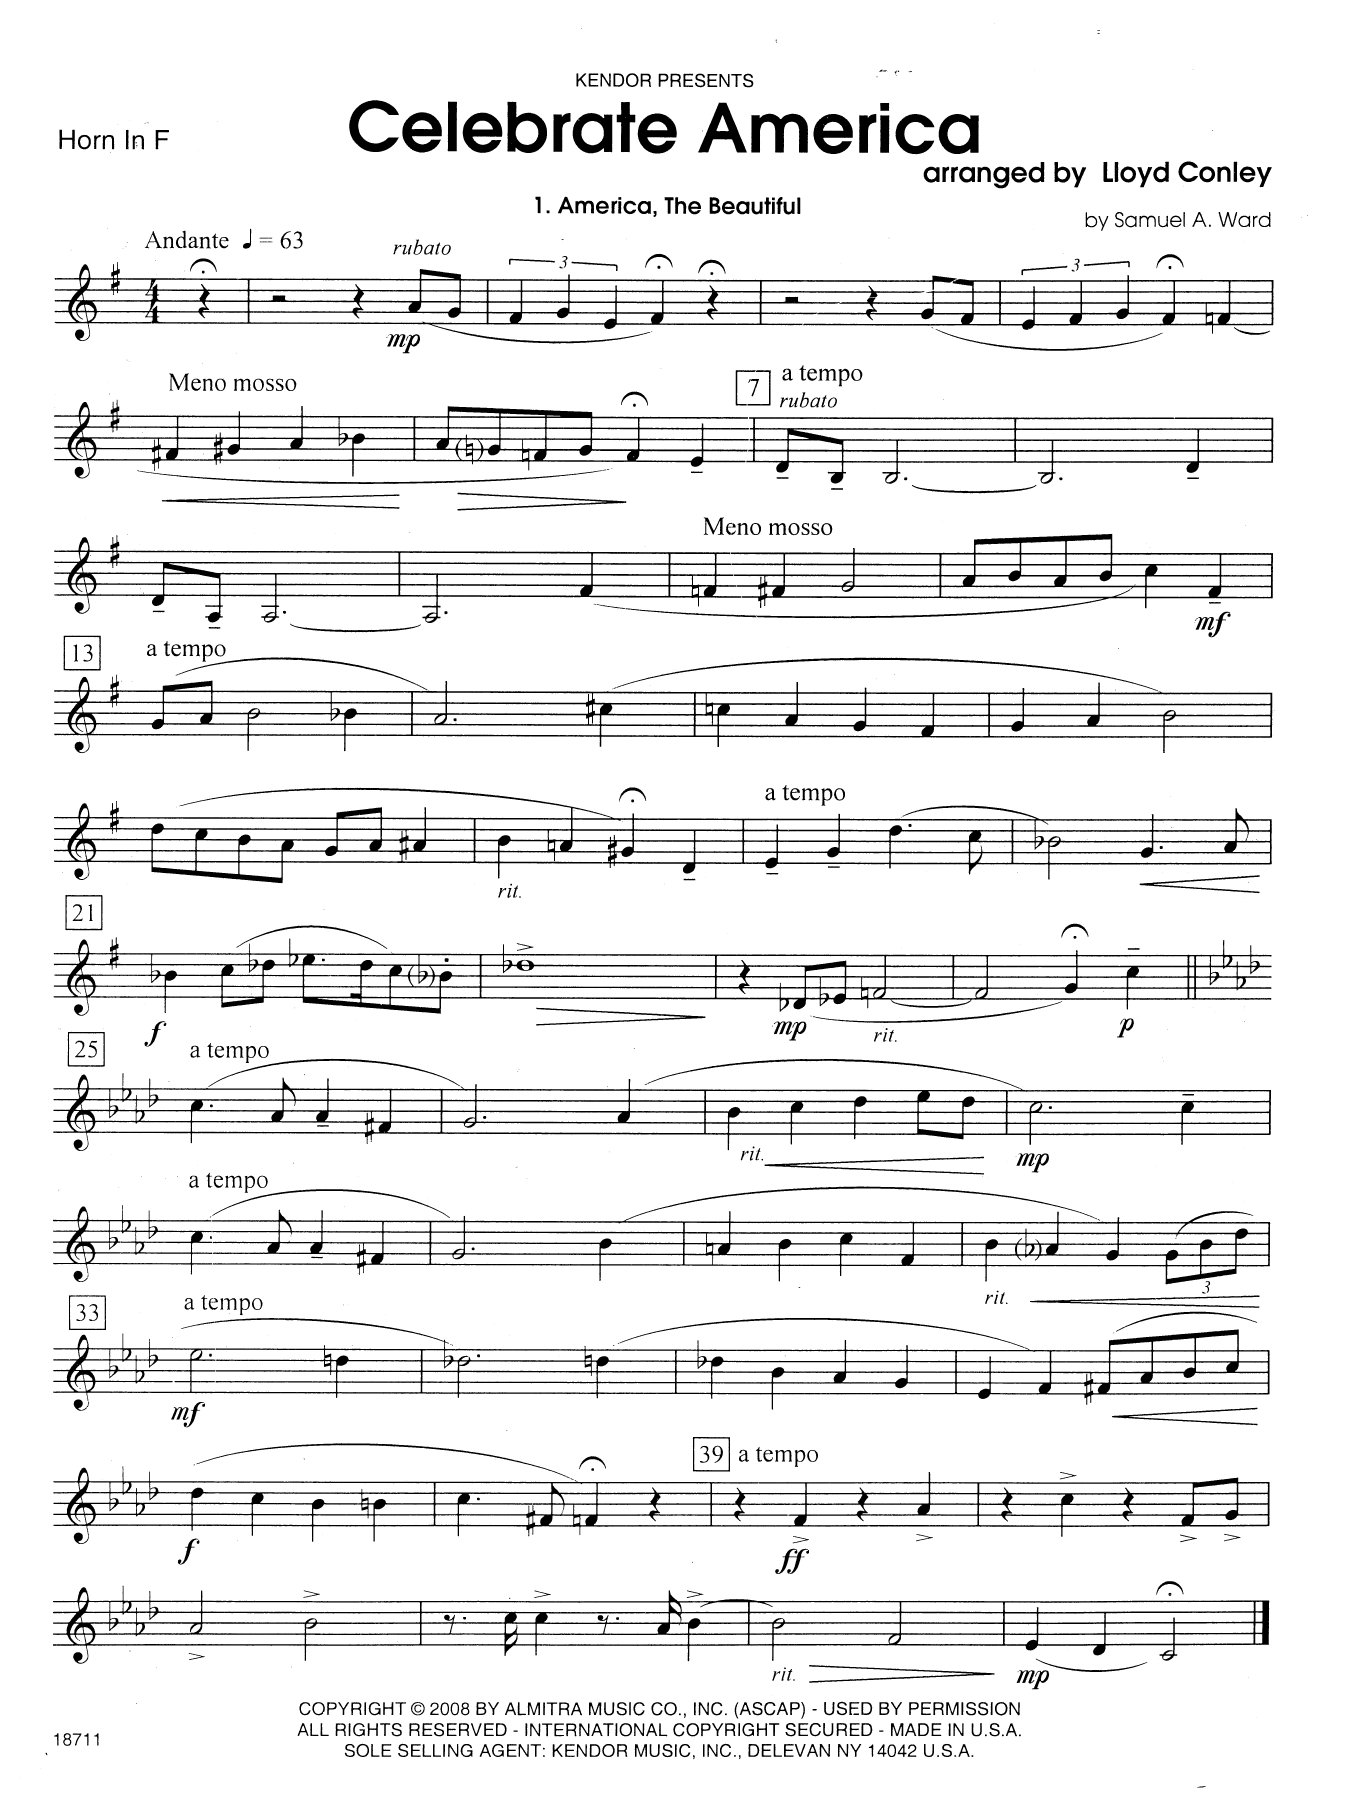 Download Lloyd Conley Celebrate America - Horn in F Sheet Music